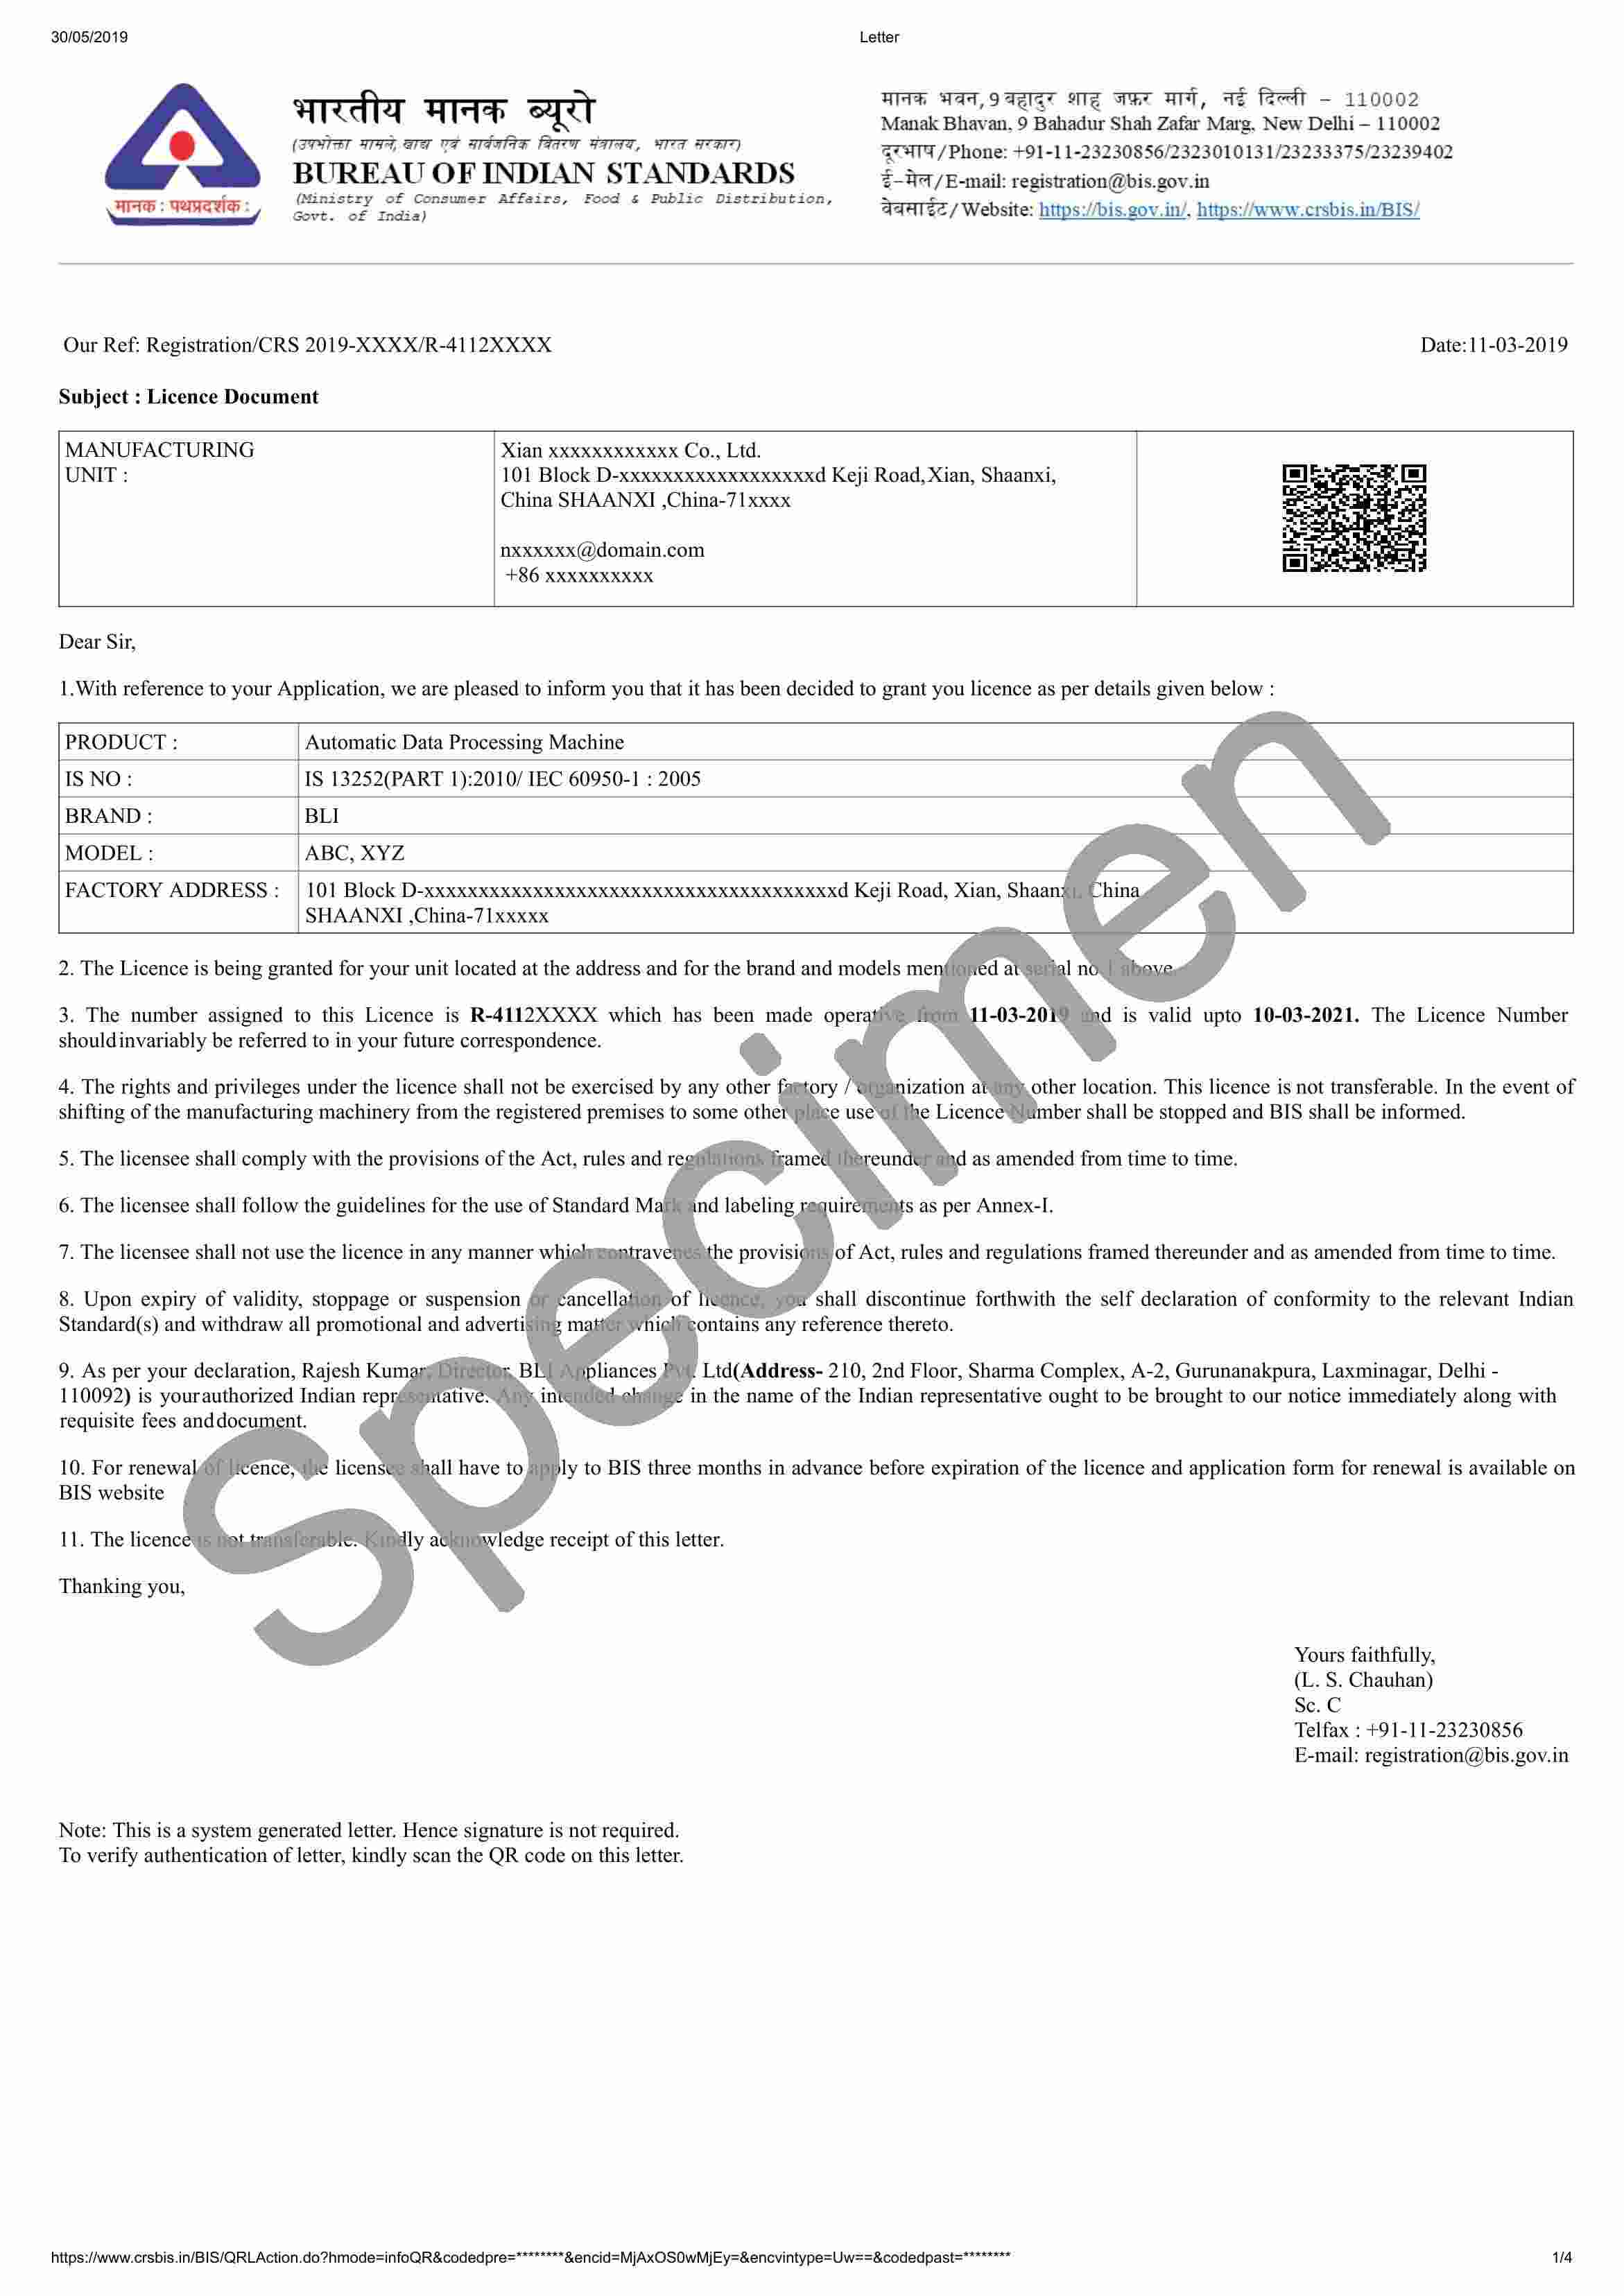 Format of BIS Registration Certificate